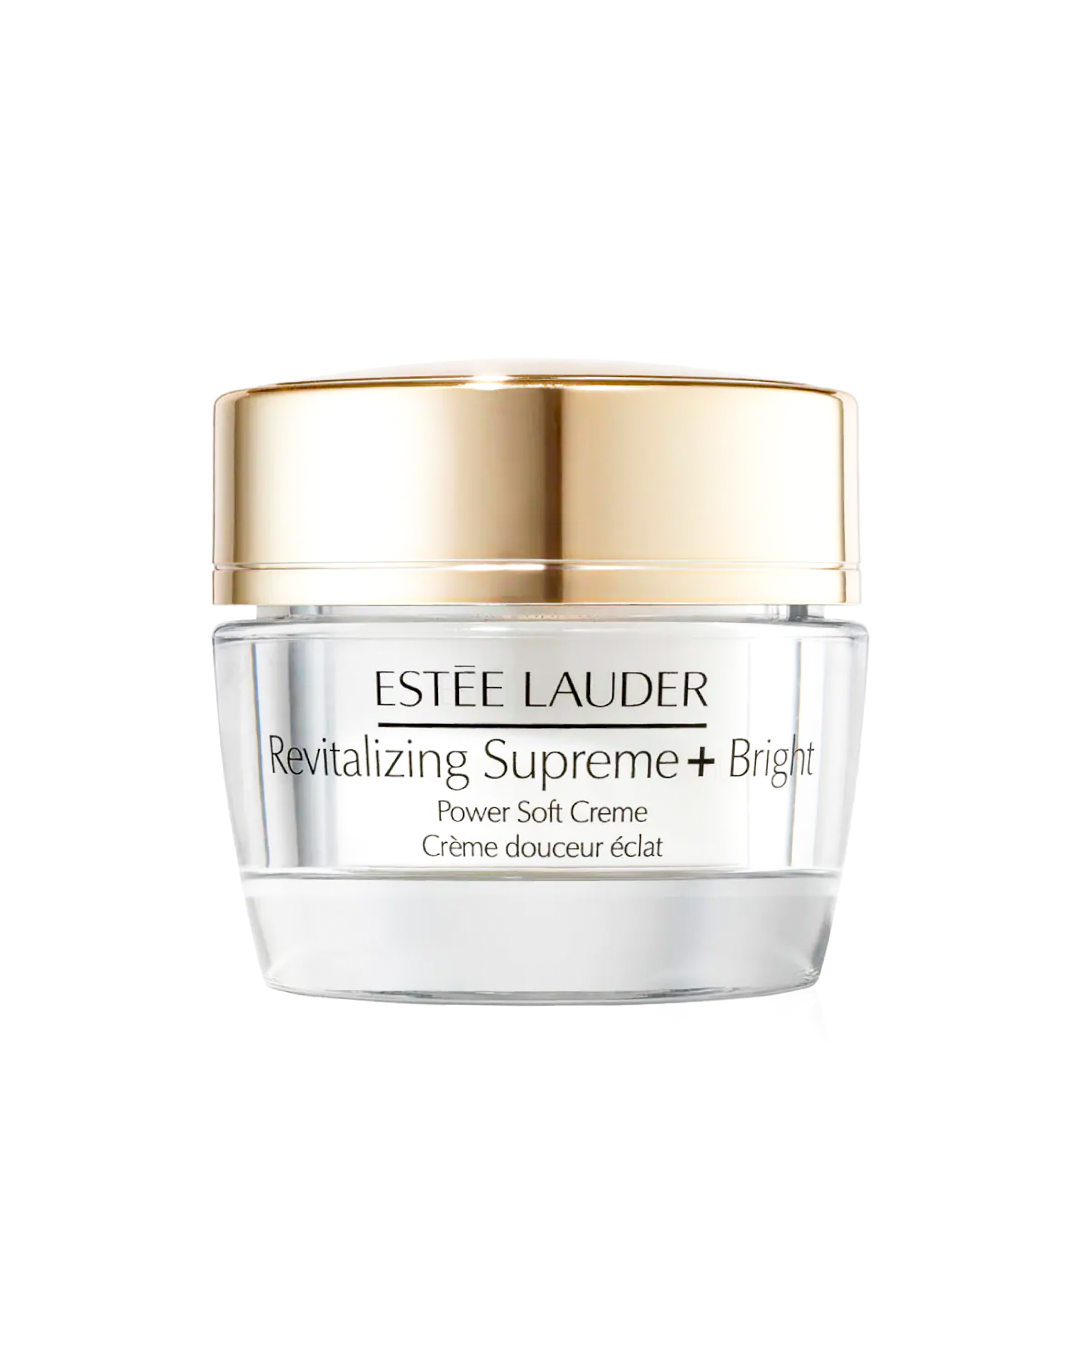 Estee Lauder Revitalizing Supreme+ Bright Power Soft Creme w/o box (15ml) - Best Buy World Philippines